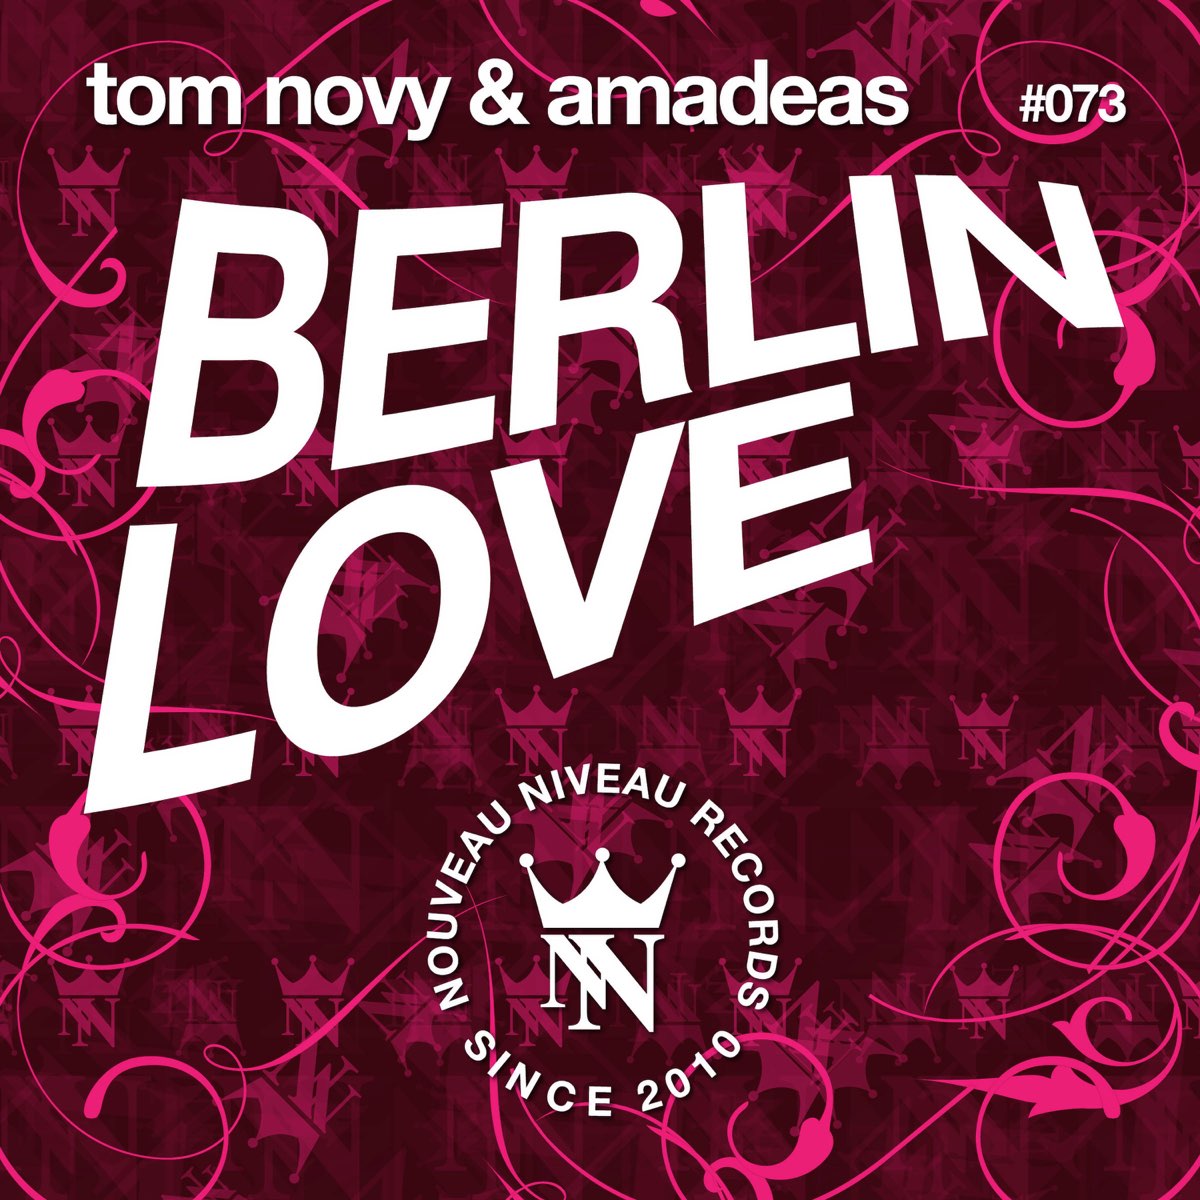 Tom novy. Tom novy Lima. CD Berlin Love Life. Love show Tom novy (ft. Skye Edwards o.